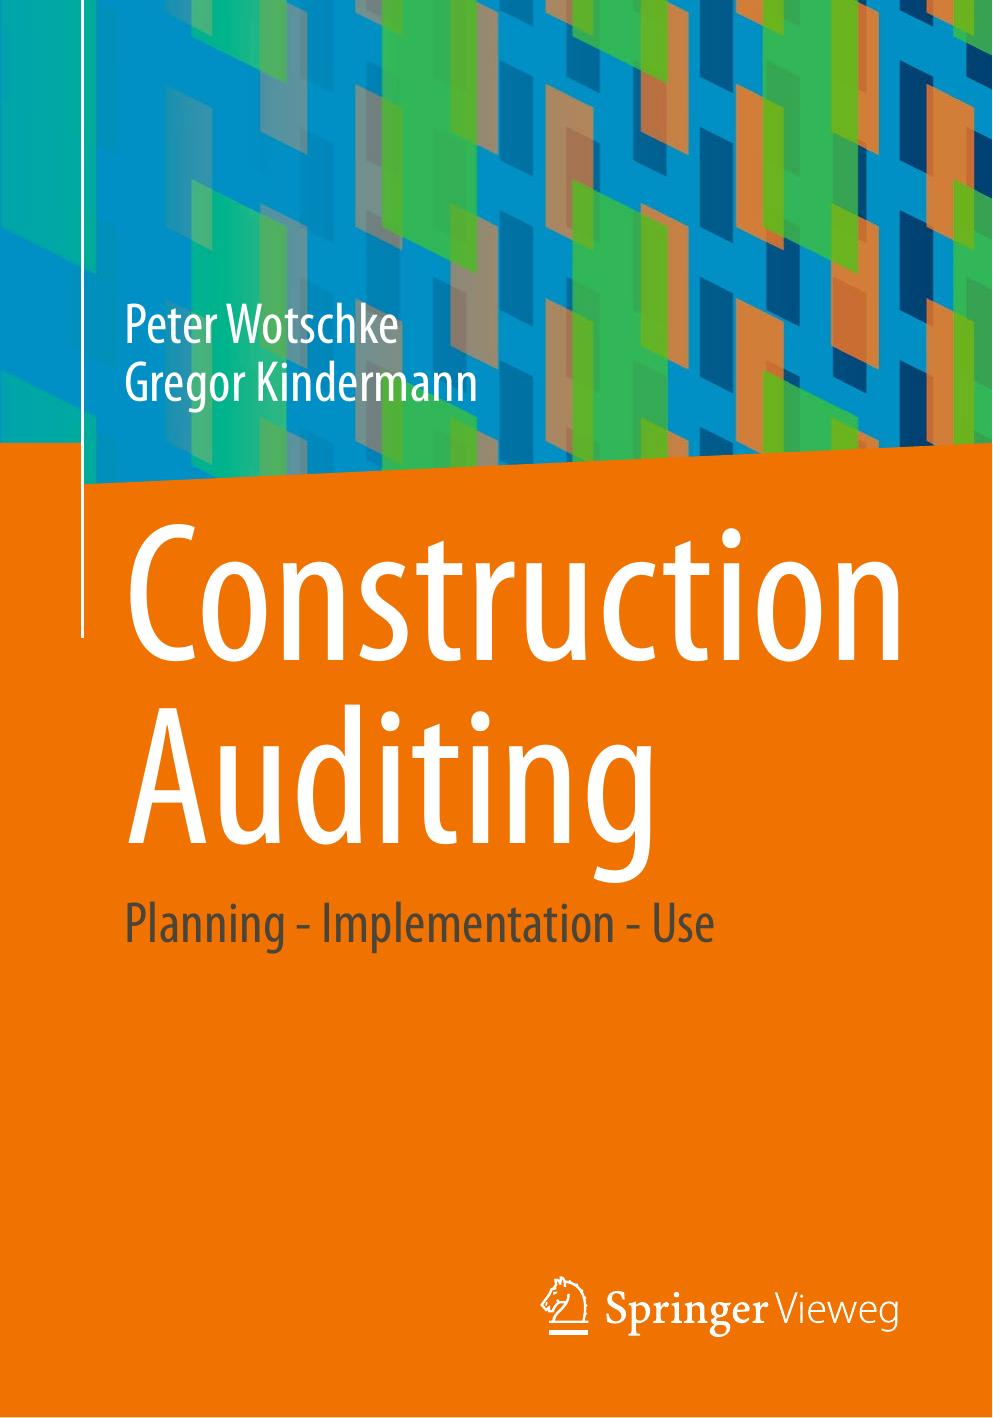 Construction Auditing: Planning - Implementation - Use by Peter Wotschke Gregor Kindermann